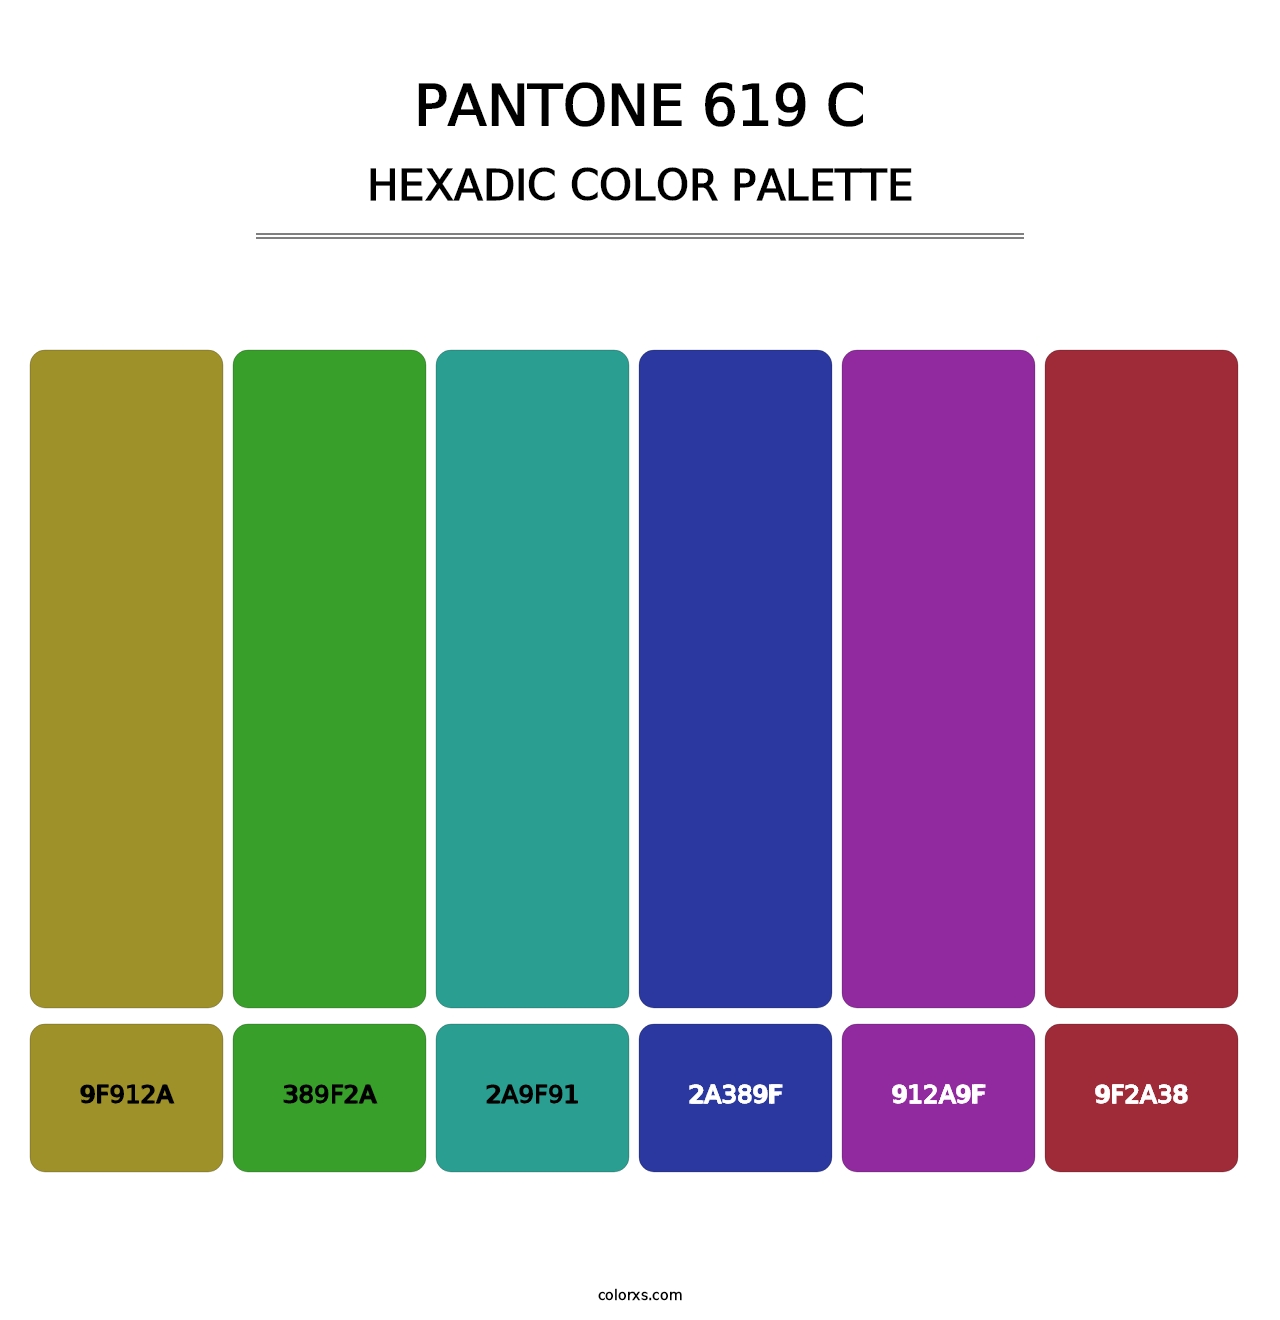 PANTONE 619 C - Hexadic Color Palette